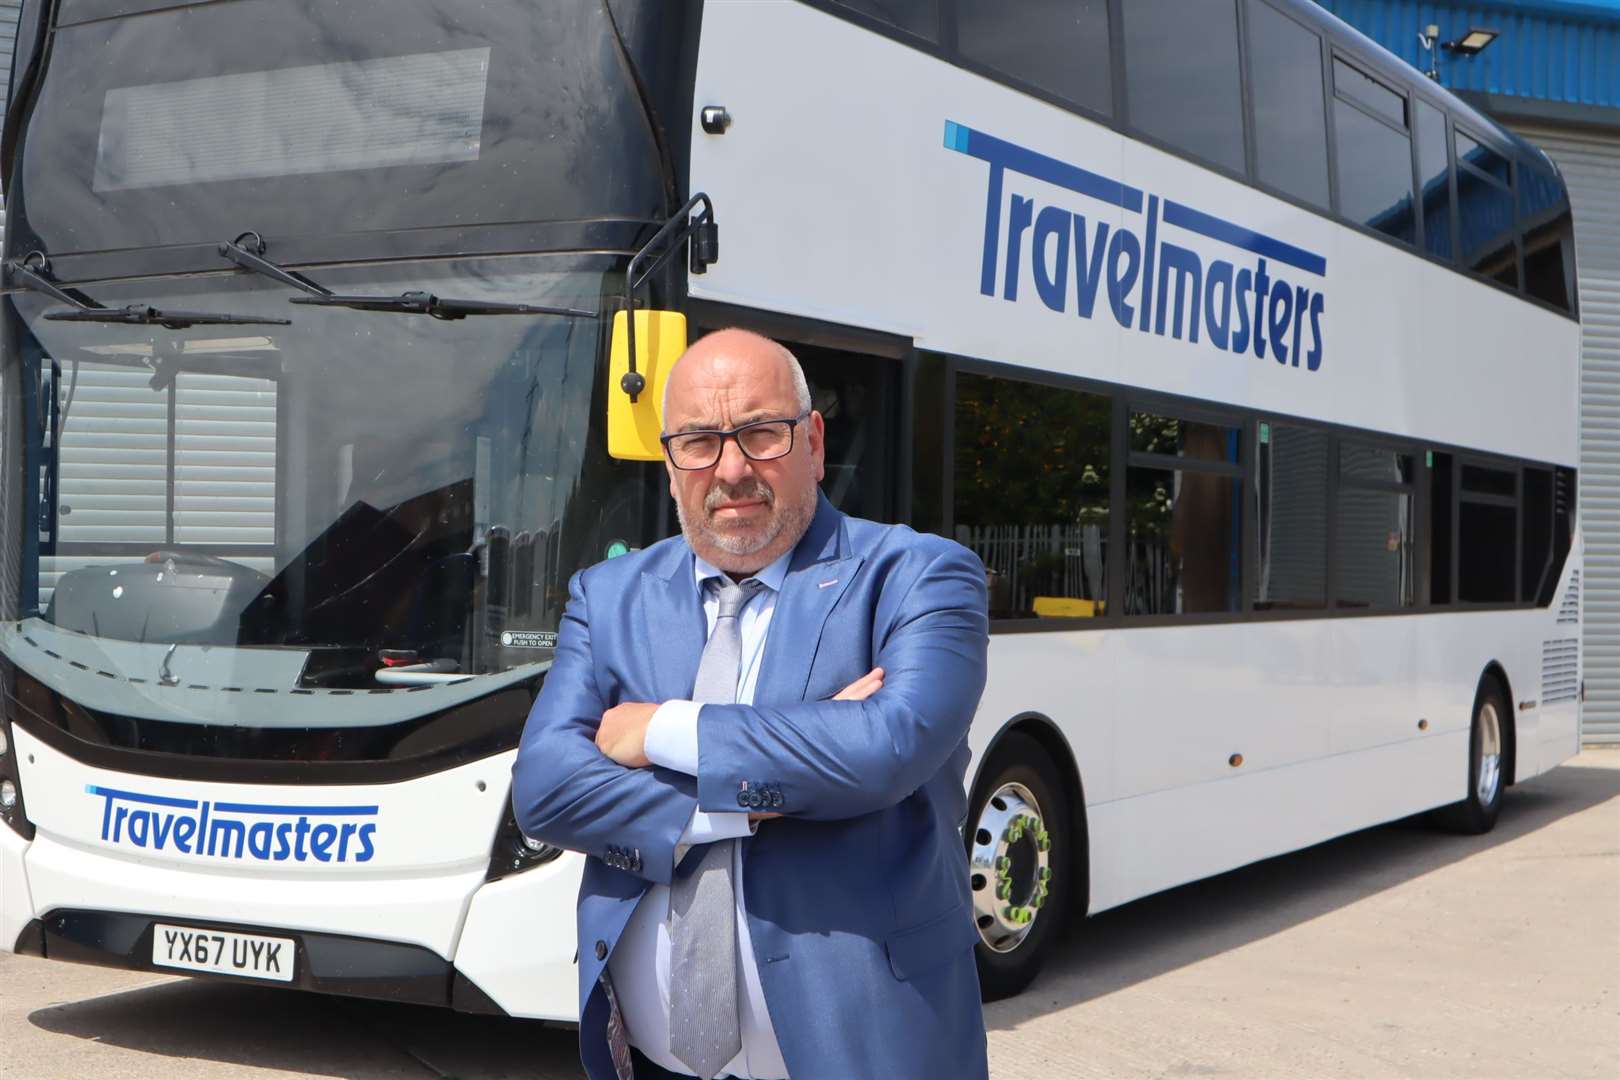 Travelmasters boss Tim Lambkin